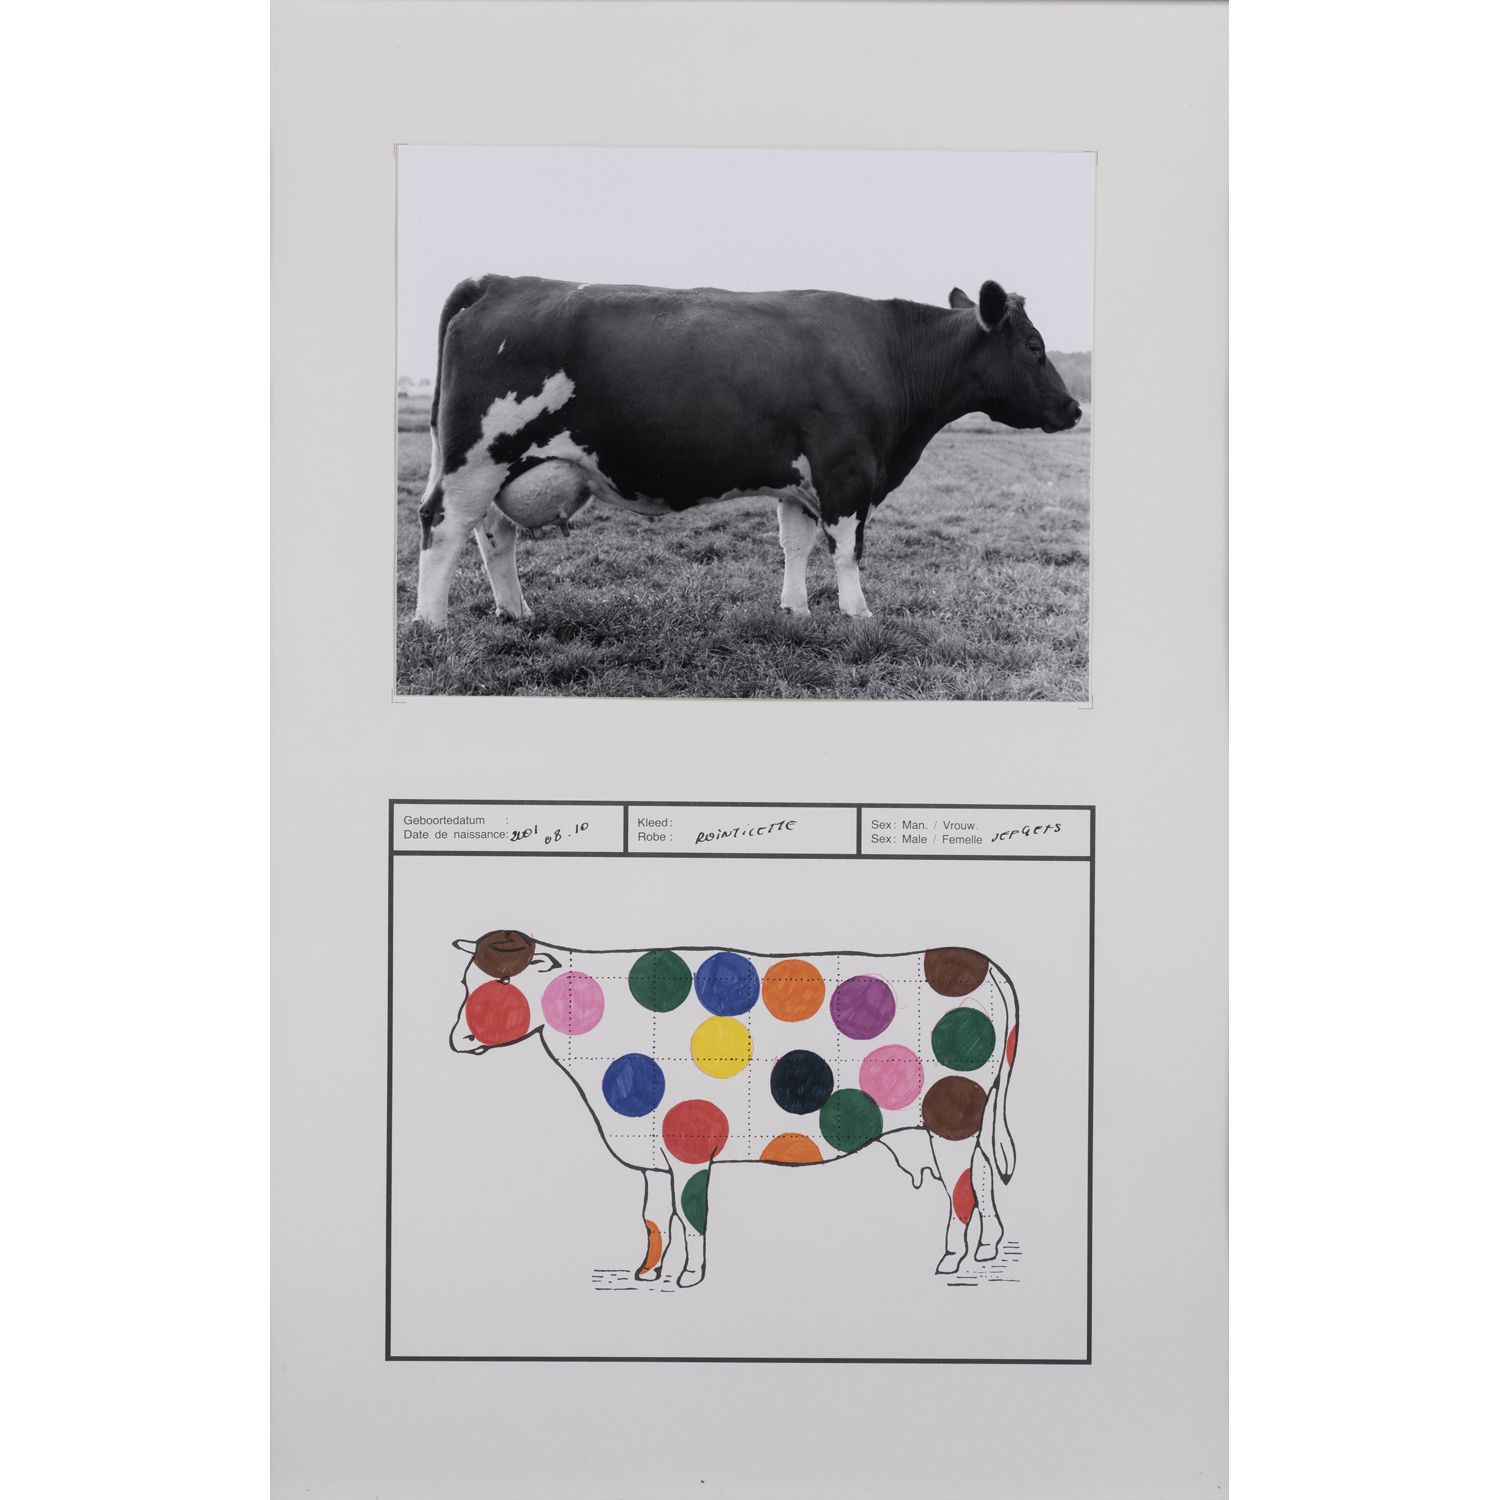 Null 杰夫-盖斯(1934-2018)

Koeienpaspoort（奶牛护照）Pointillette，（双联画），约2001年

纸上银印和彩色标记
&hellip;